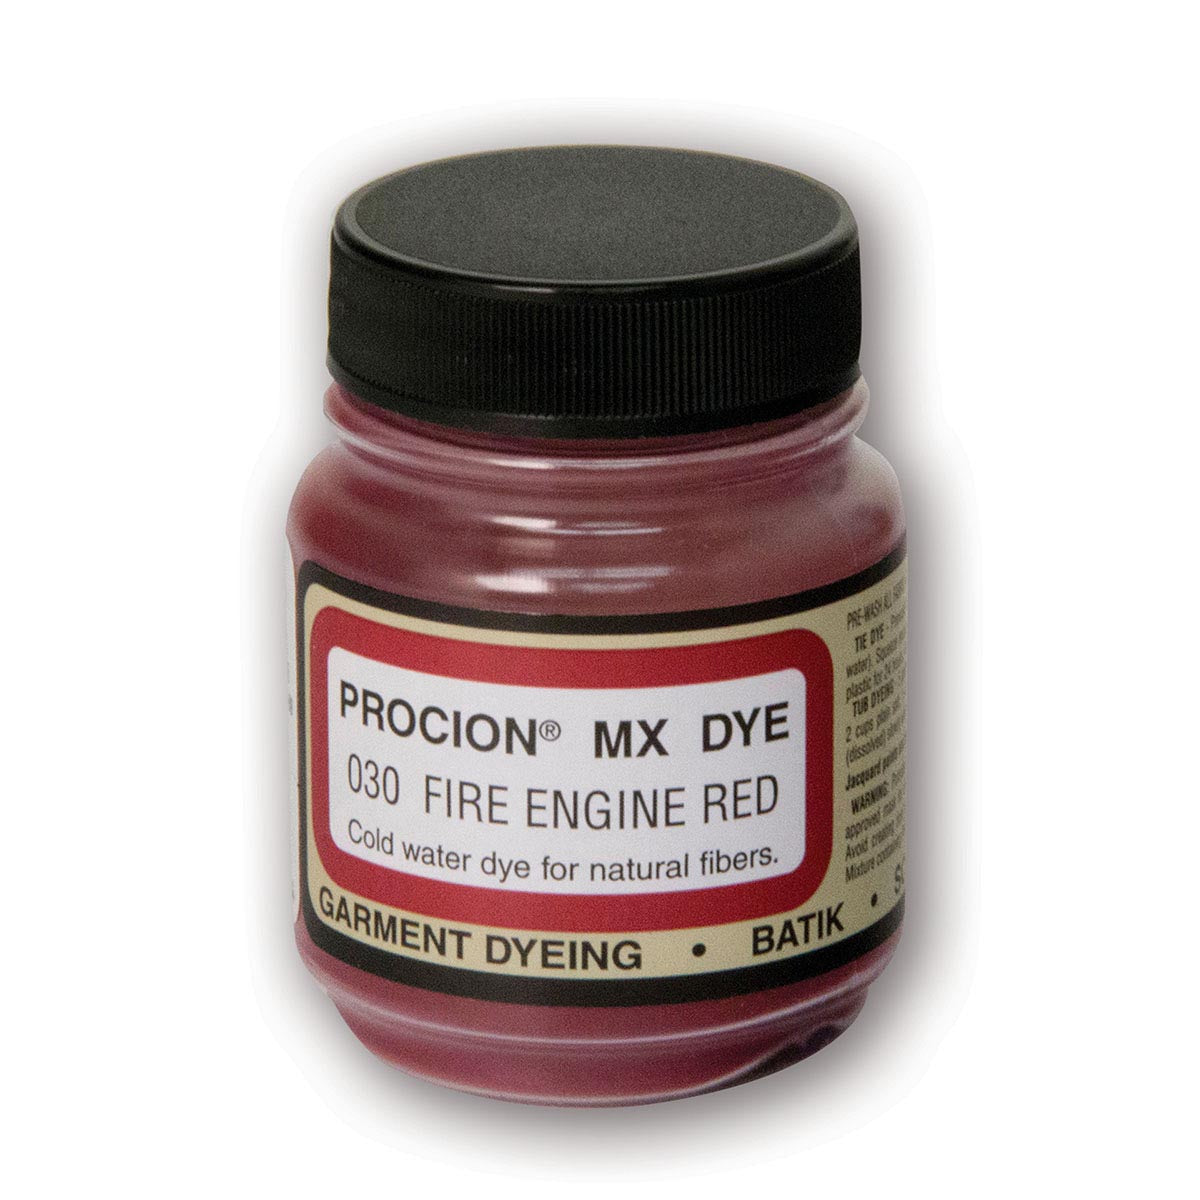 Jacquard - Procion MX Dye - Fabric Textile - Fire Engine Red 030